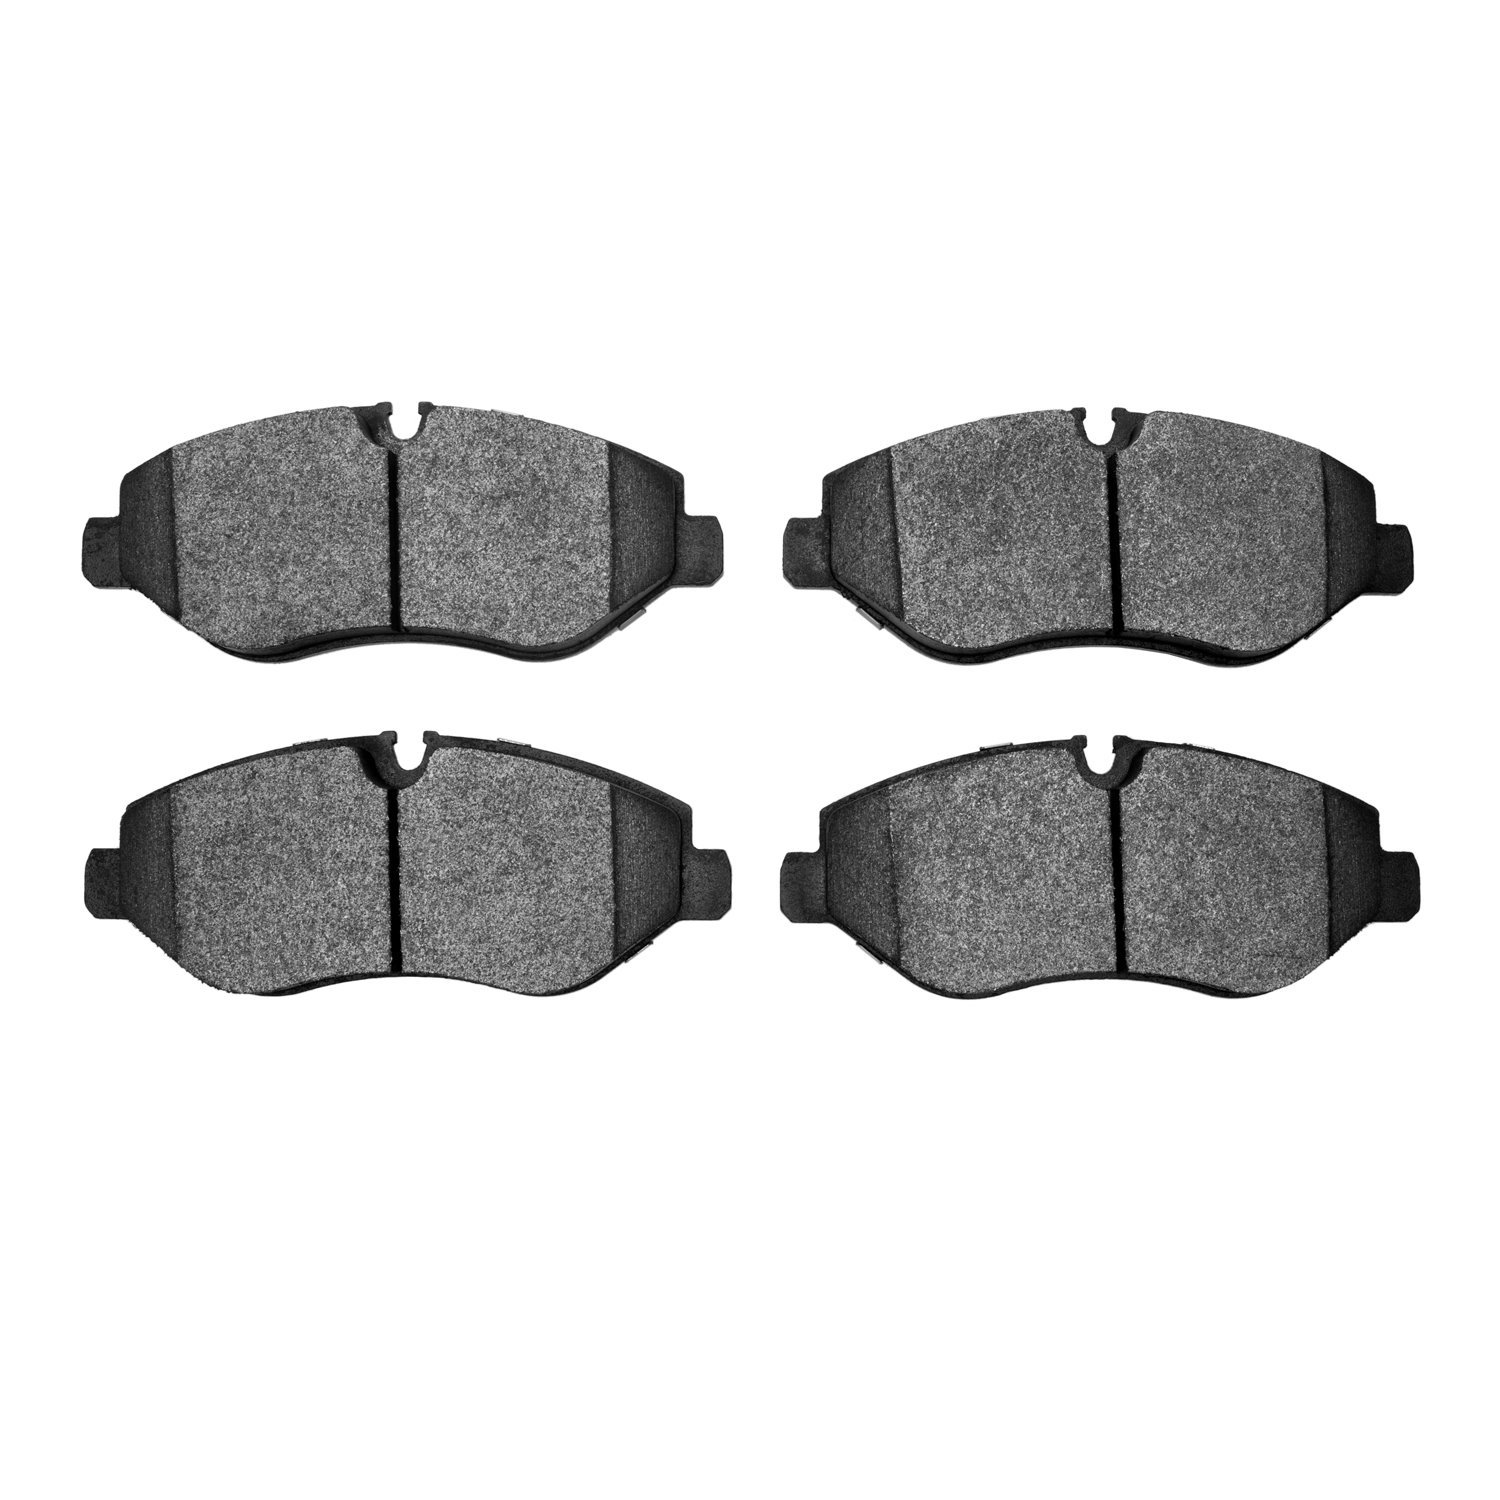 Super-Duty Brake Pads, Fits Select Fits Multiple Makes/Models, Position: Front